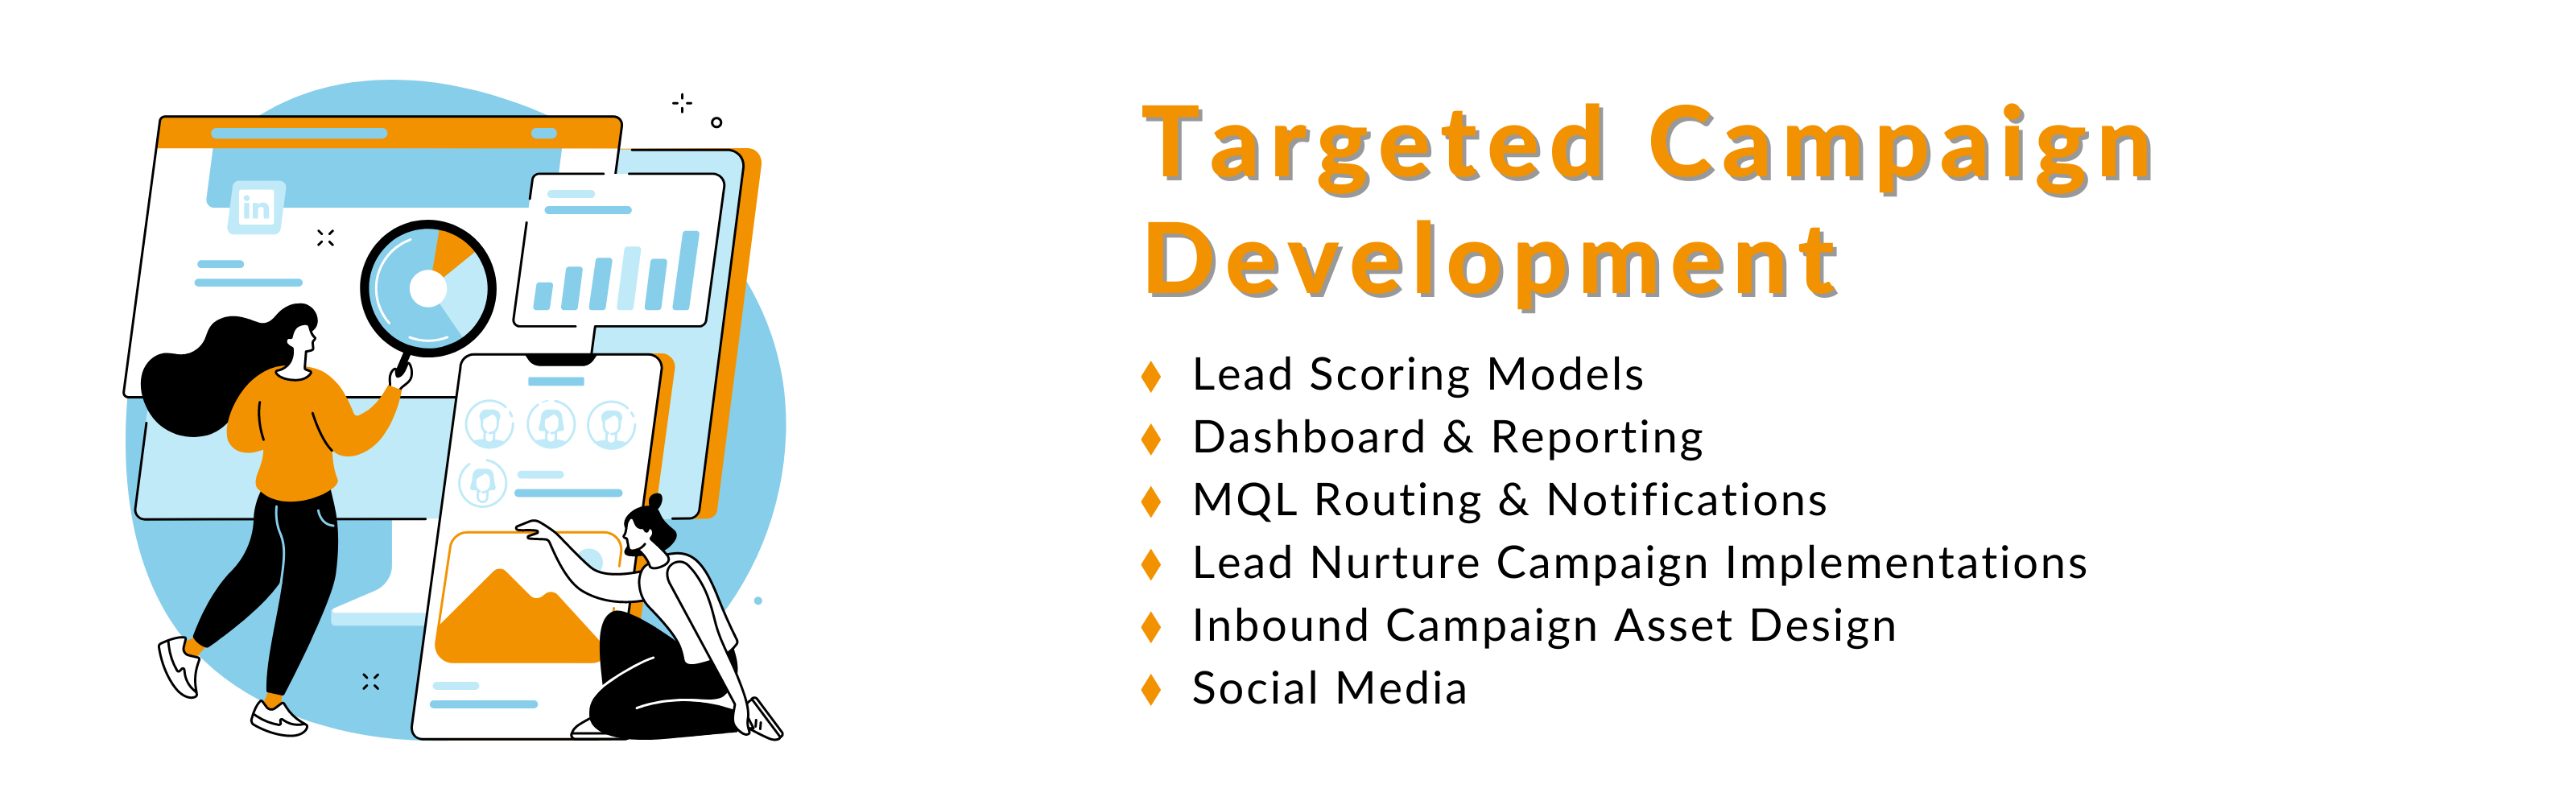 Digital LP_Body Graphic_Targeted Campaign Development_V2-1